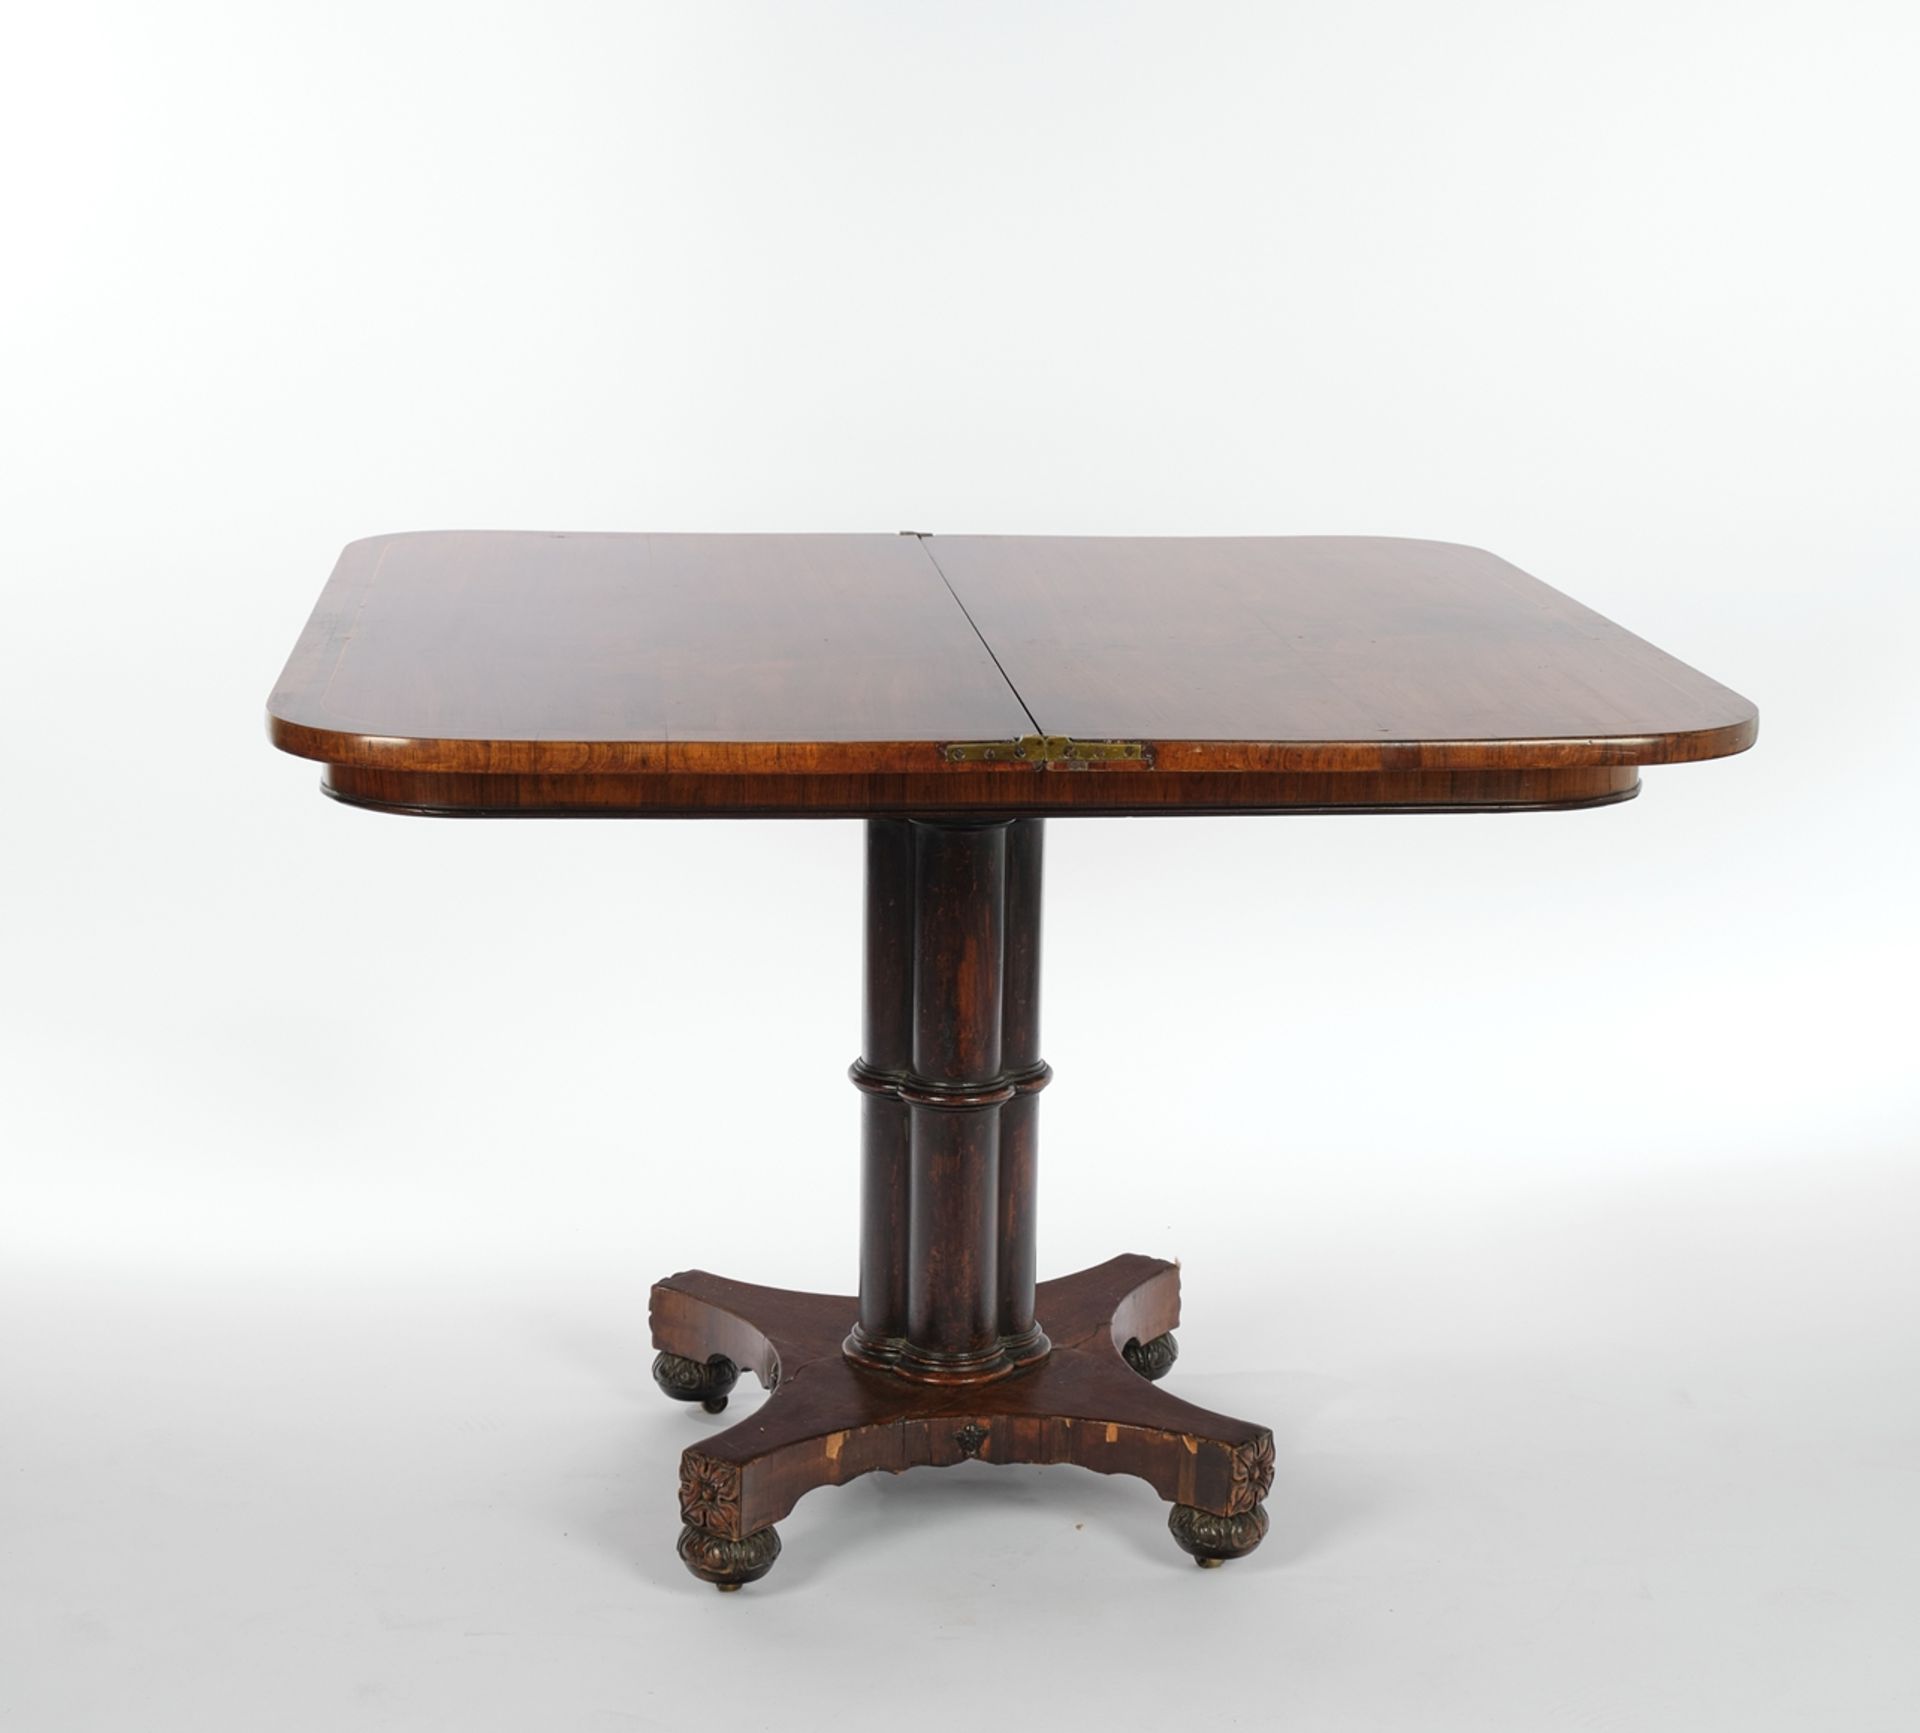 Spieltisch / Konsoltisch, Biedermeier, um 1830, Mahagoni furniert, Fadeneinlagen, rechteckige Platt - Image 3 of 4